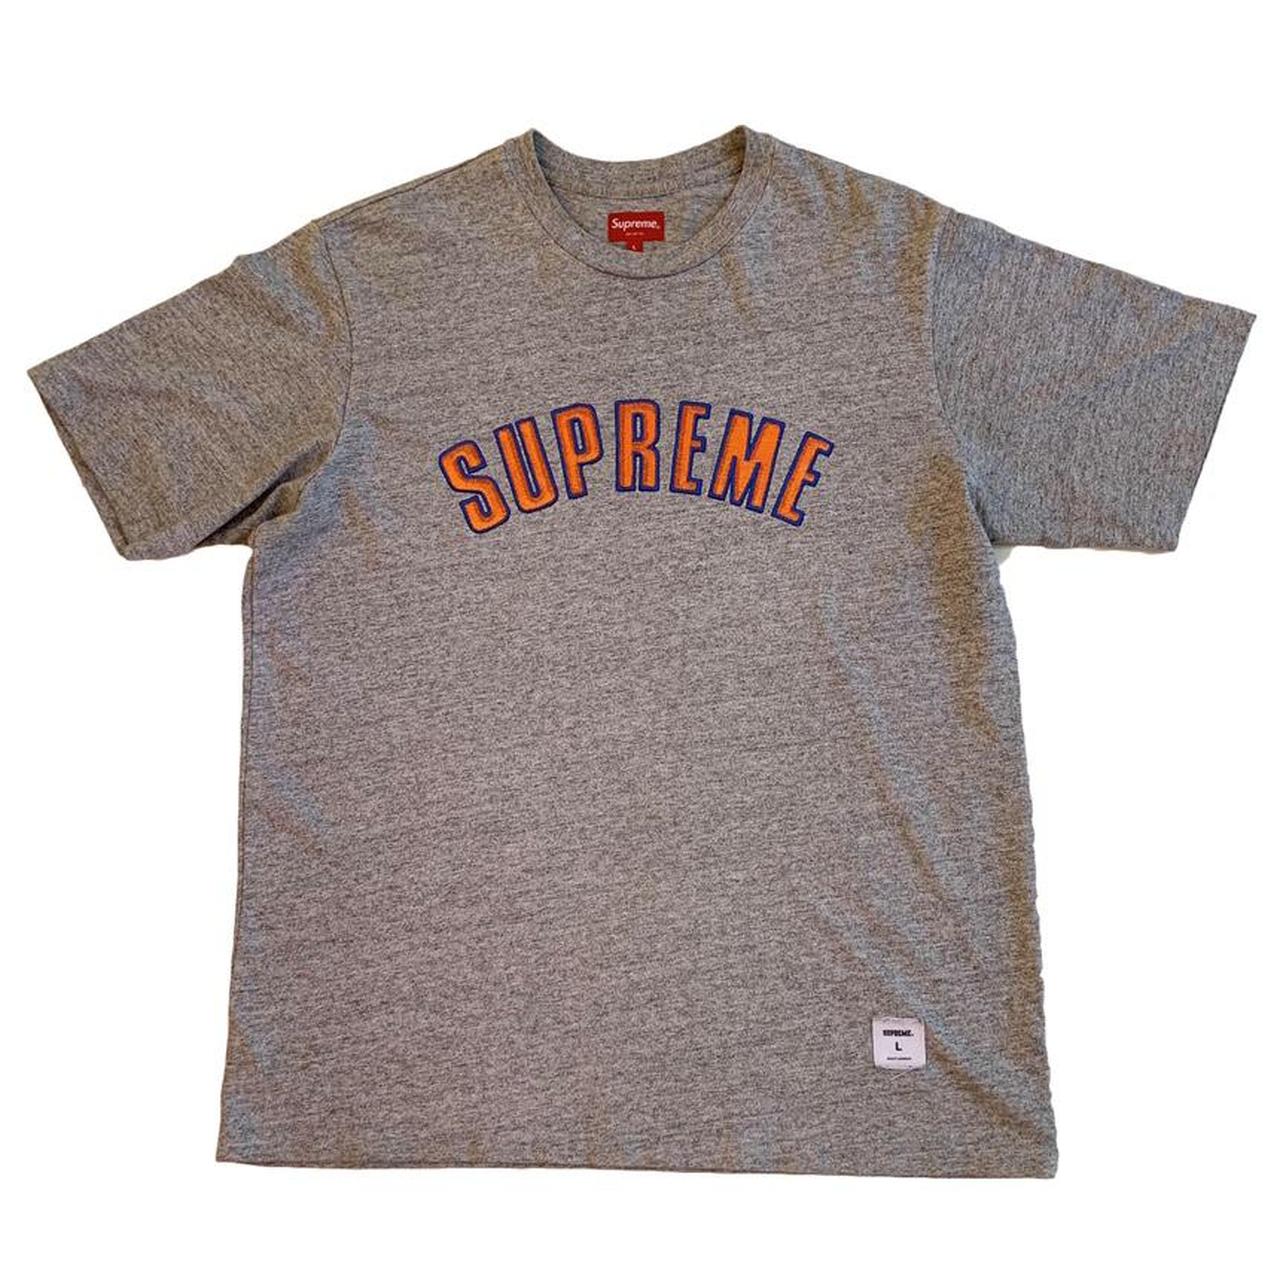 Supreme Arc Logo Tee (Grey) Size Large, Great